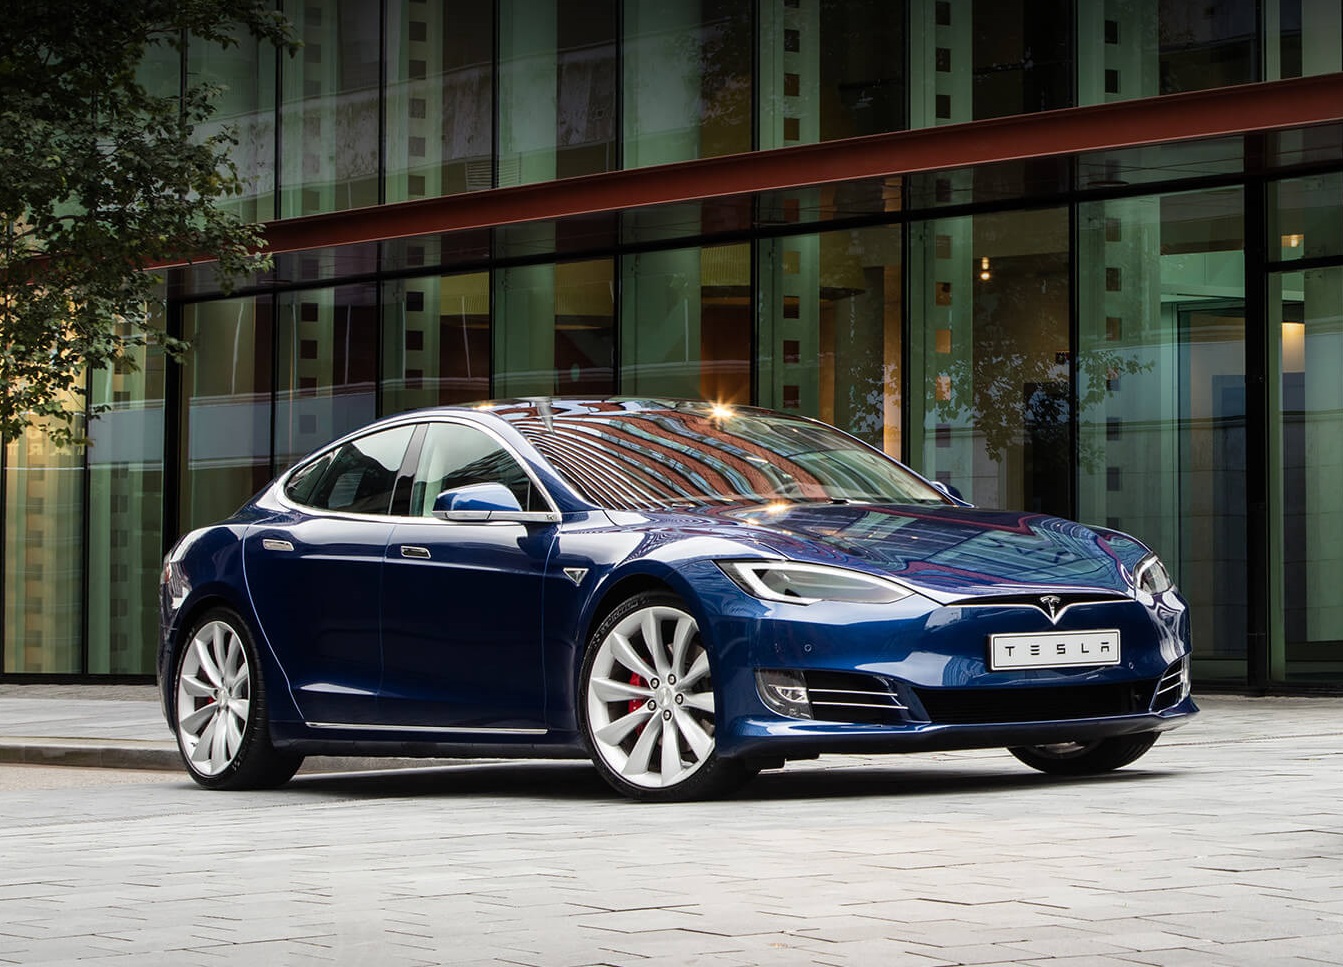 No Updates For Tesla Model S Model X Says Musk